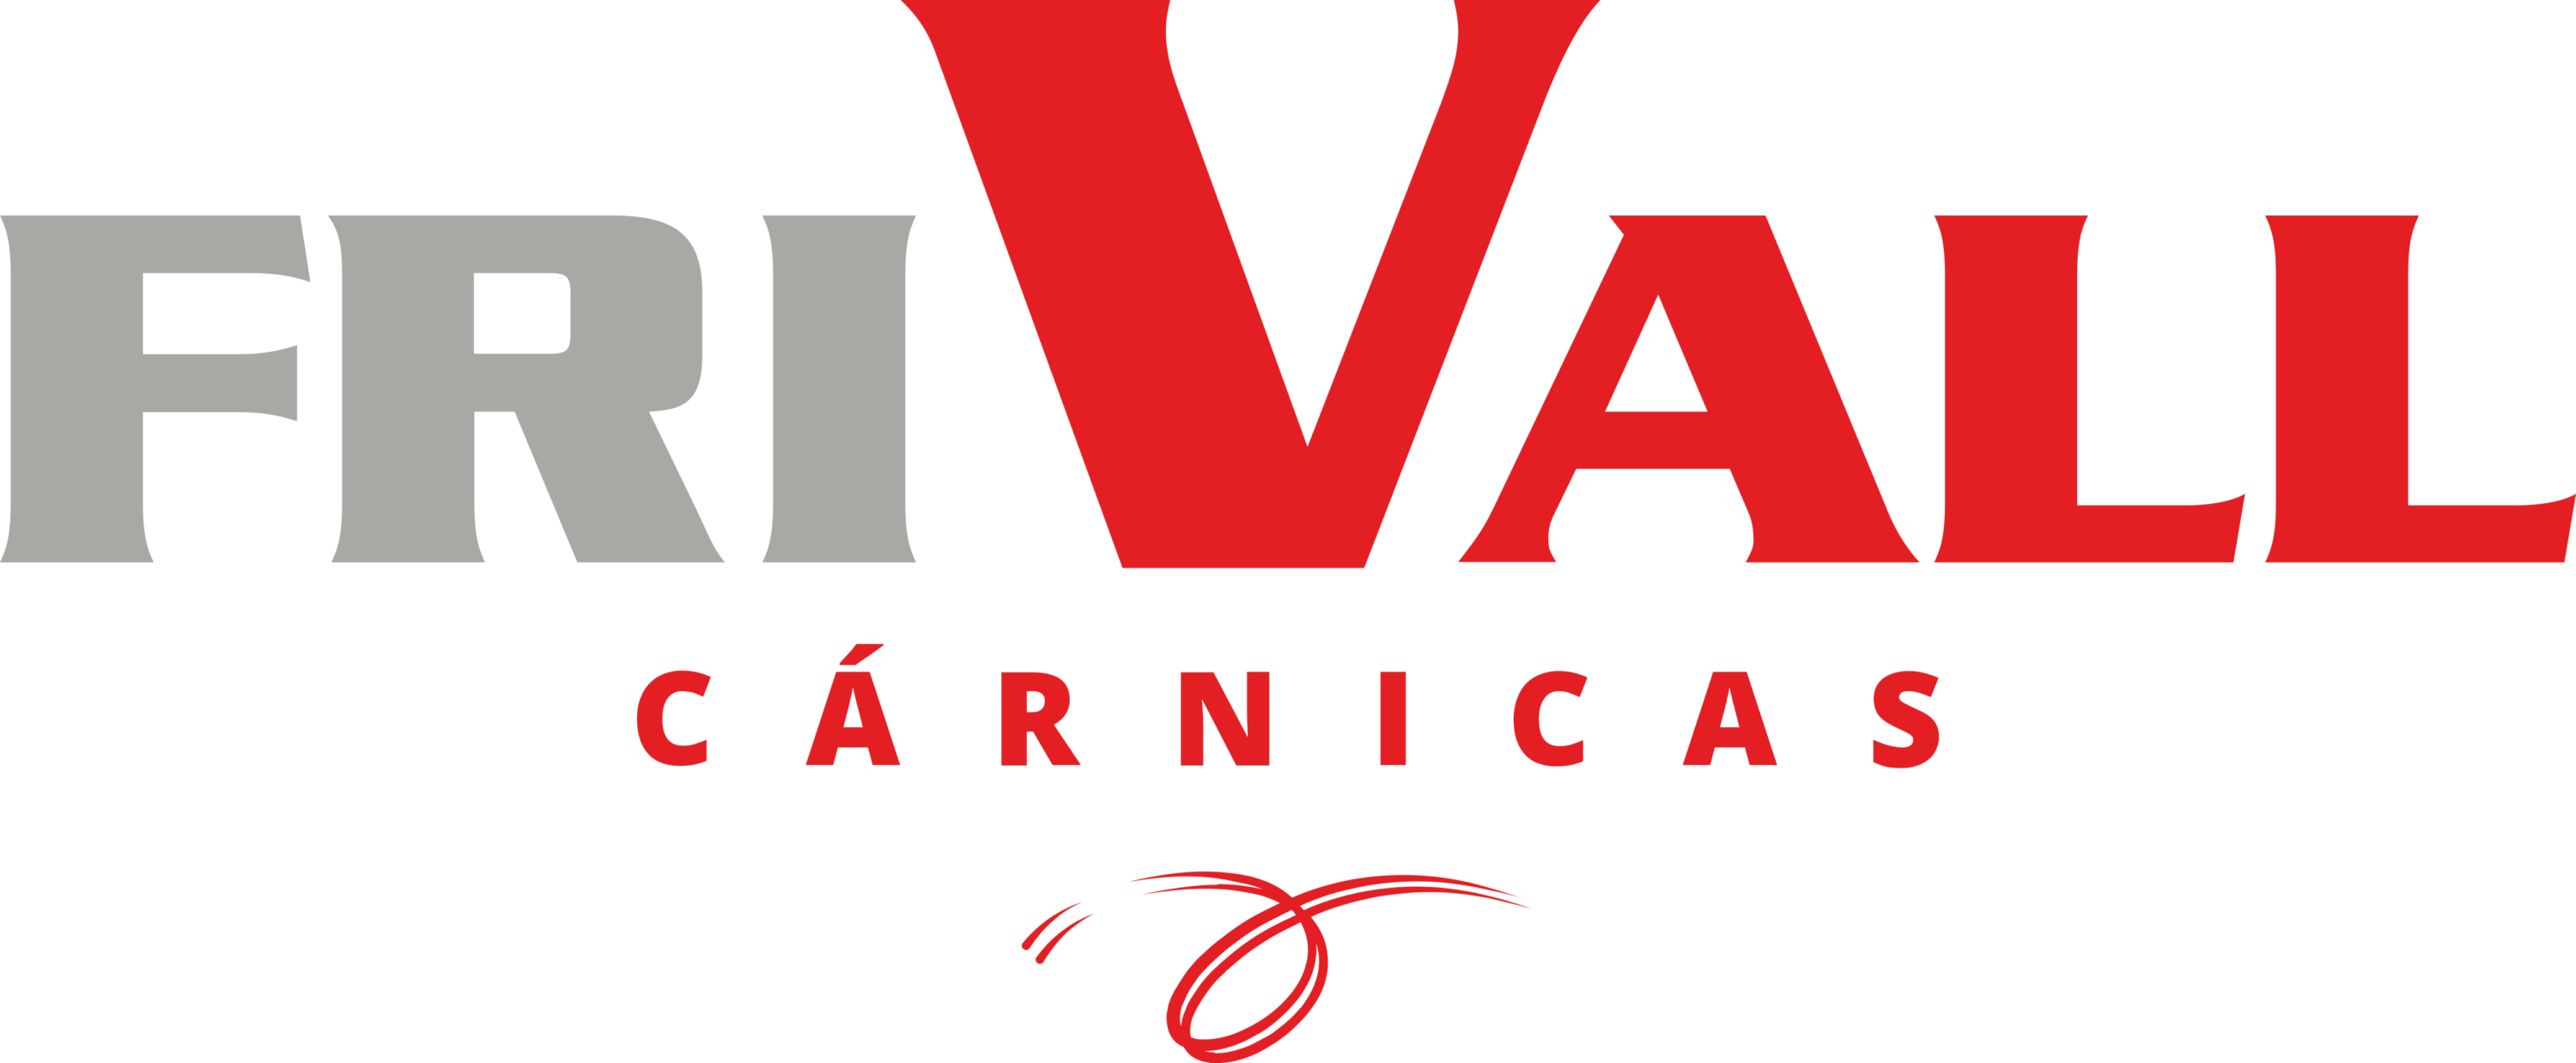 Carnicas Frivall Logo